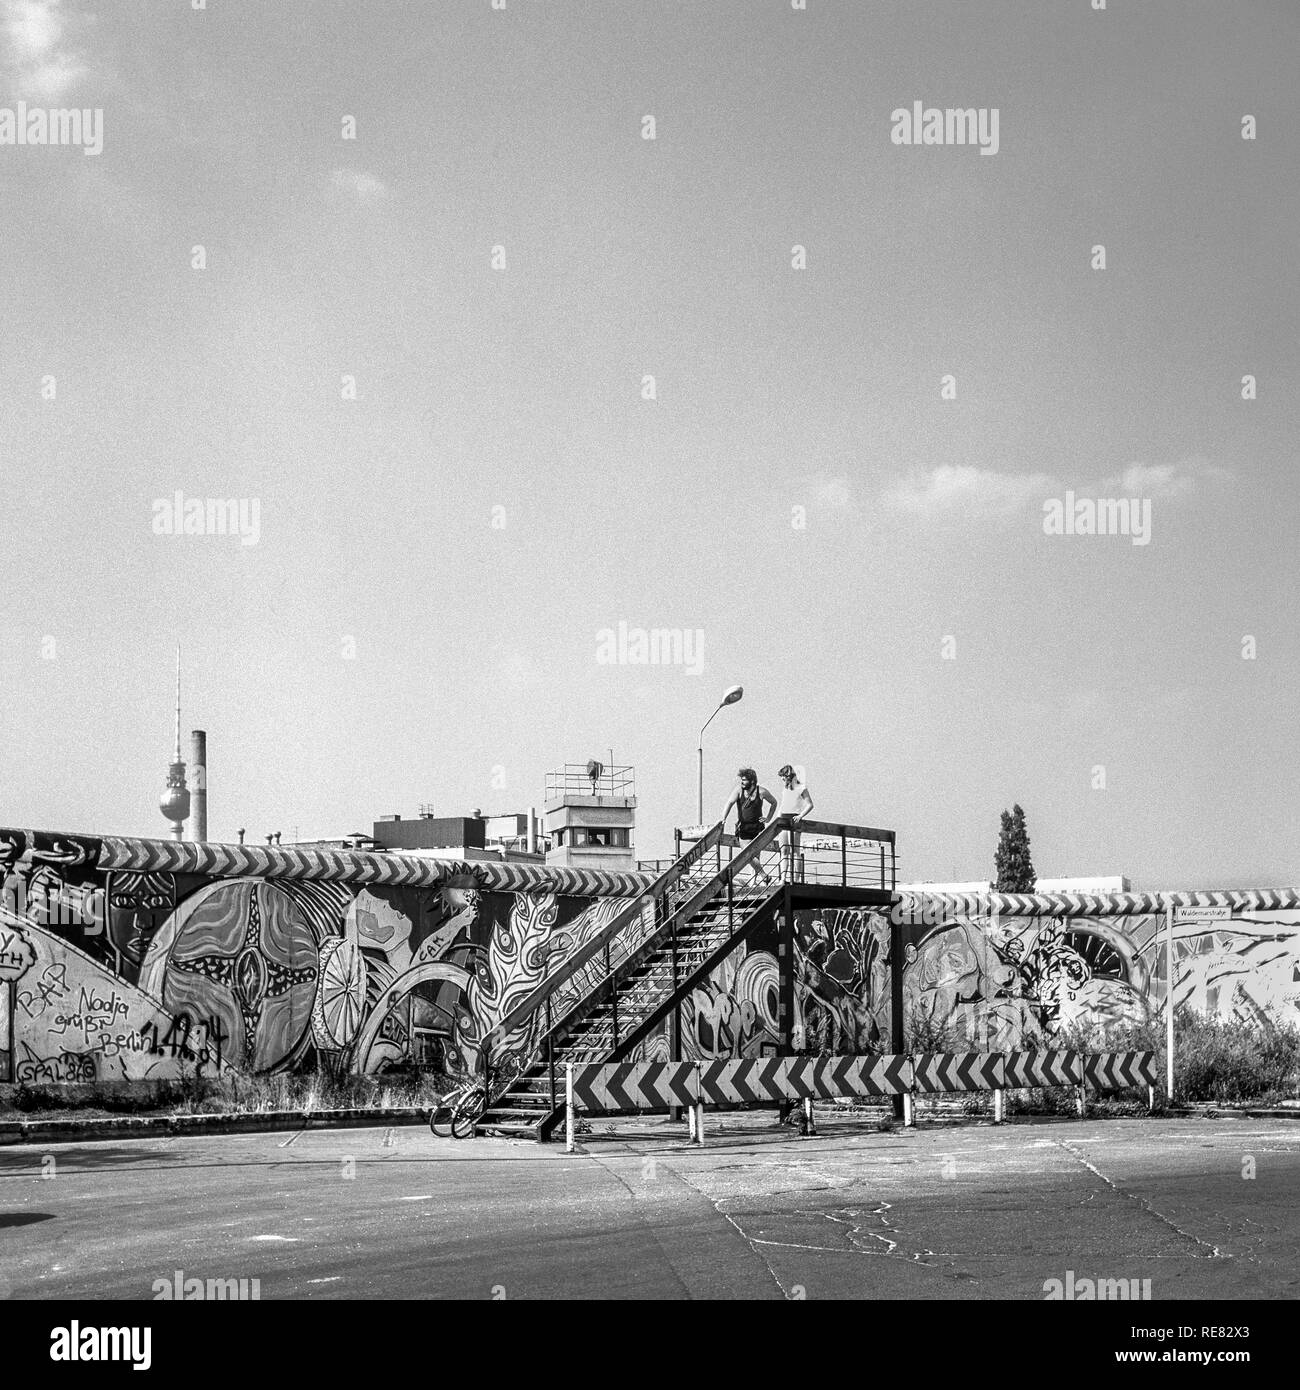 August 1986, Berlin Wall graffitis, young couple on observation platform, East Berlin watchtower, Kreuzberg, West Berlin side, Germany, Europe, Stock Photo